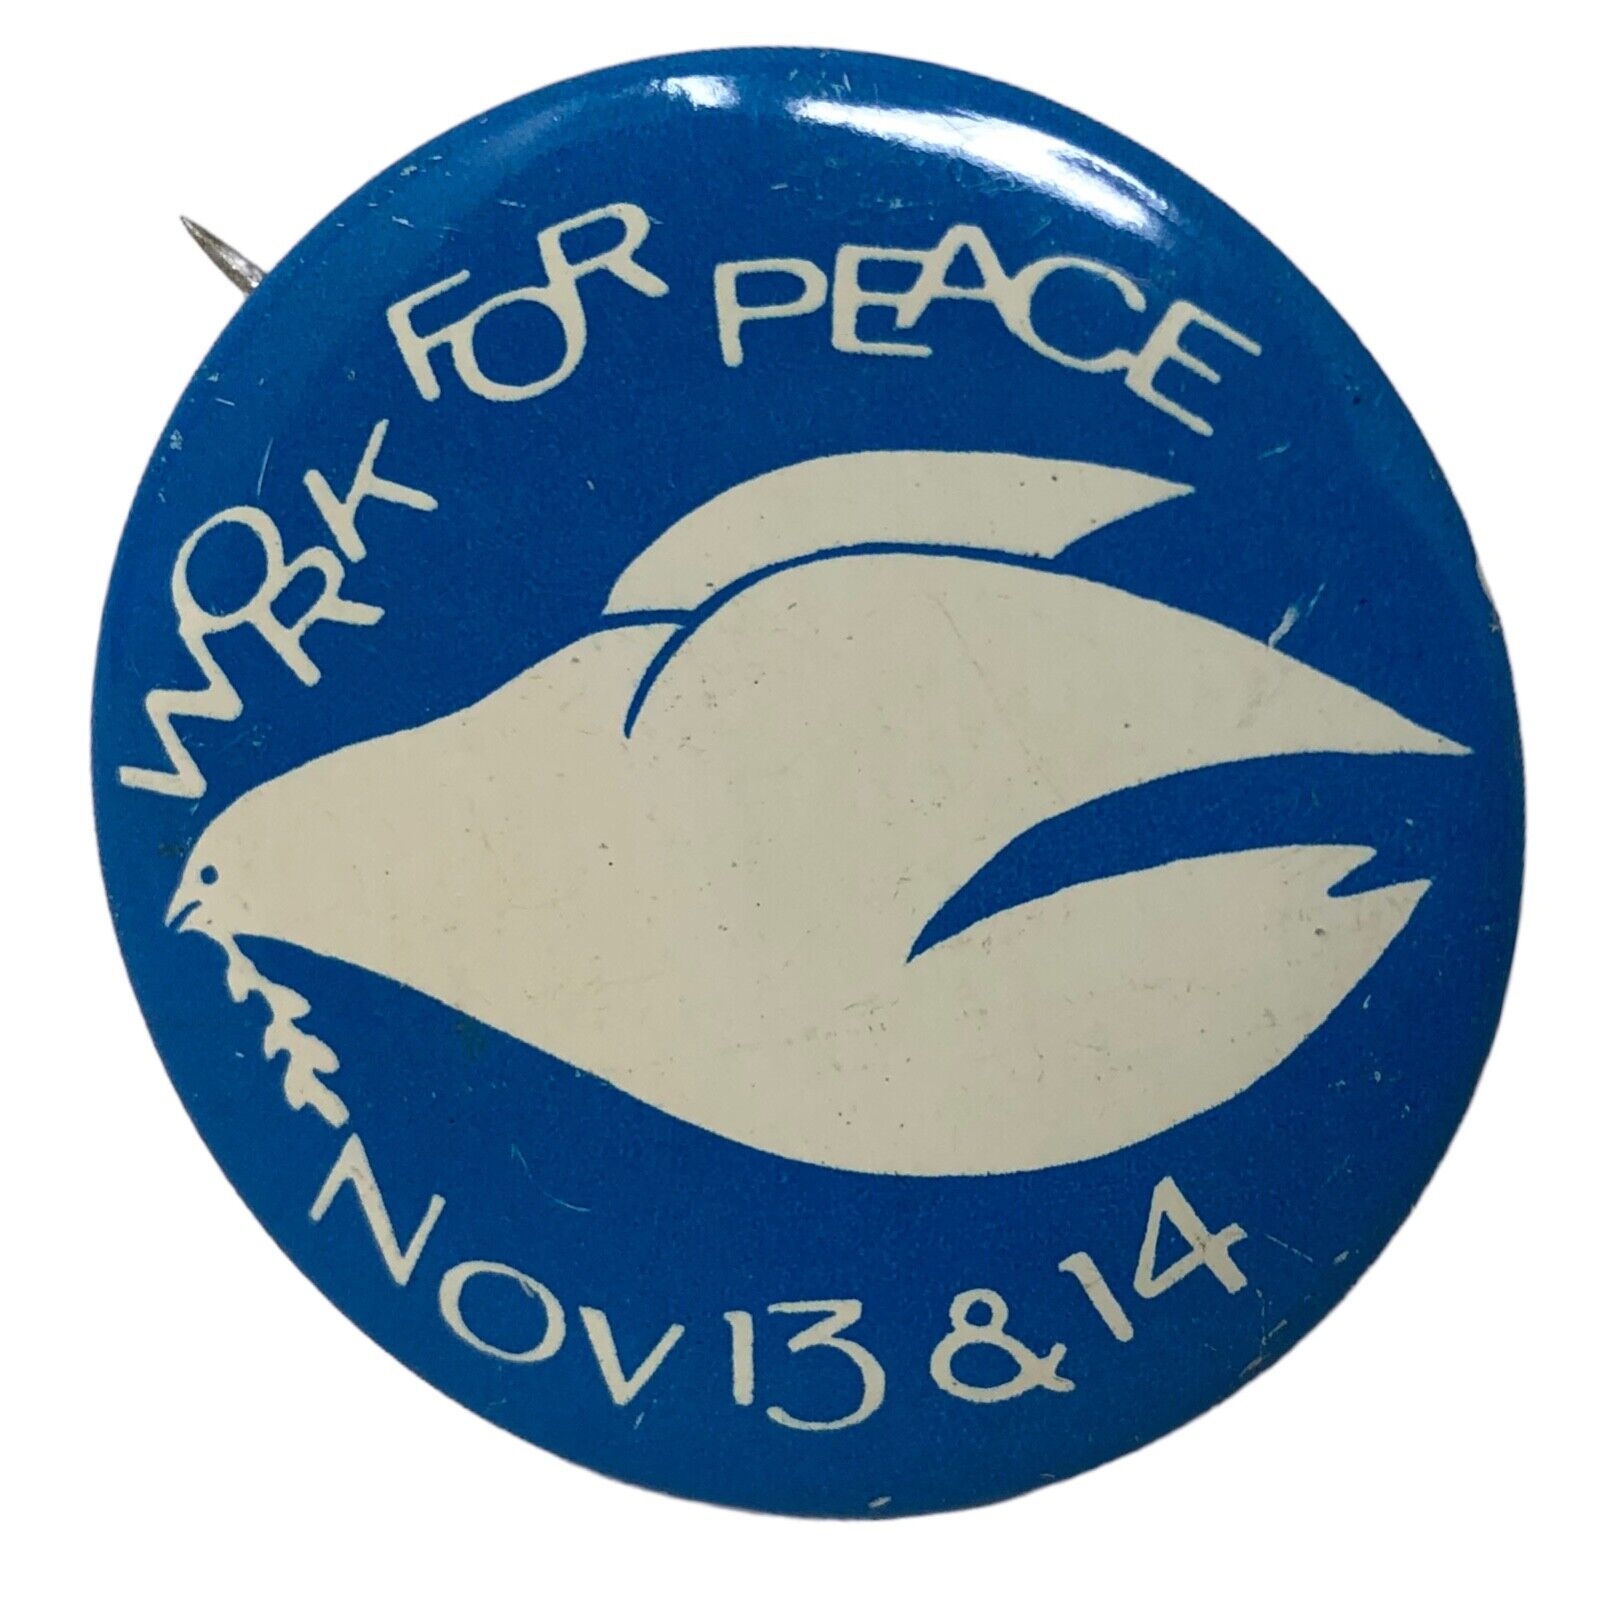 VTG Work For Peace Anti-Vietnam Nov 13 14 Peace Dove Pin Button 1.5